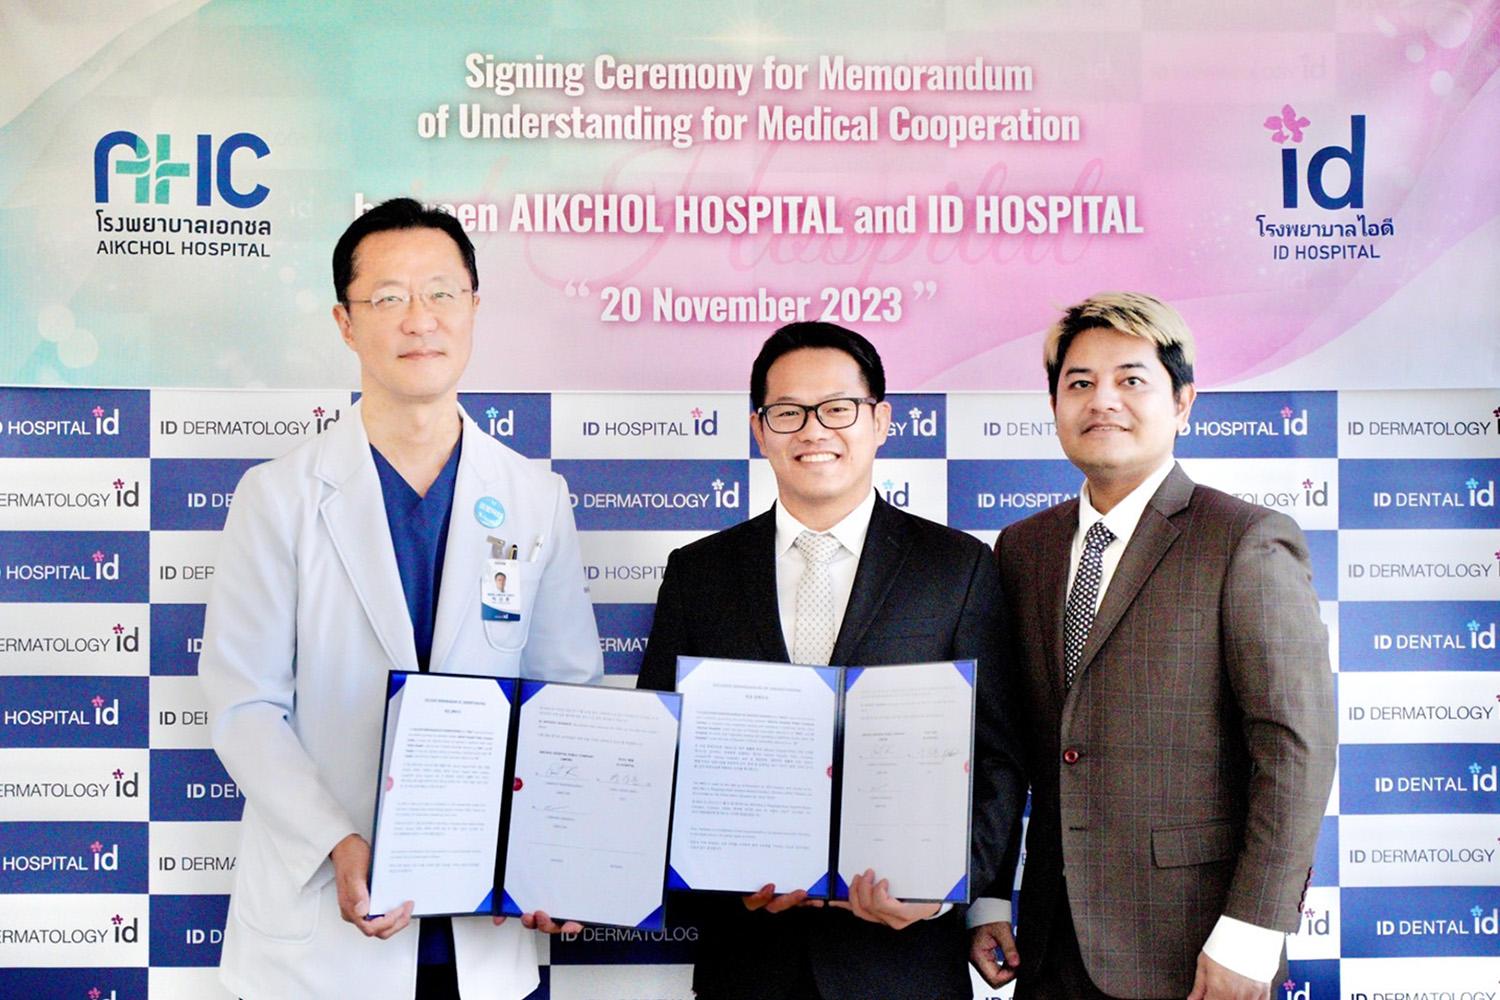 ahc-wellness-plastic-surgery-happy-face-korea-idhospital-SPACEBAR-Hero.jpg